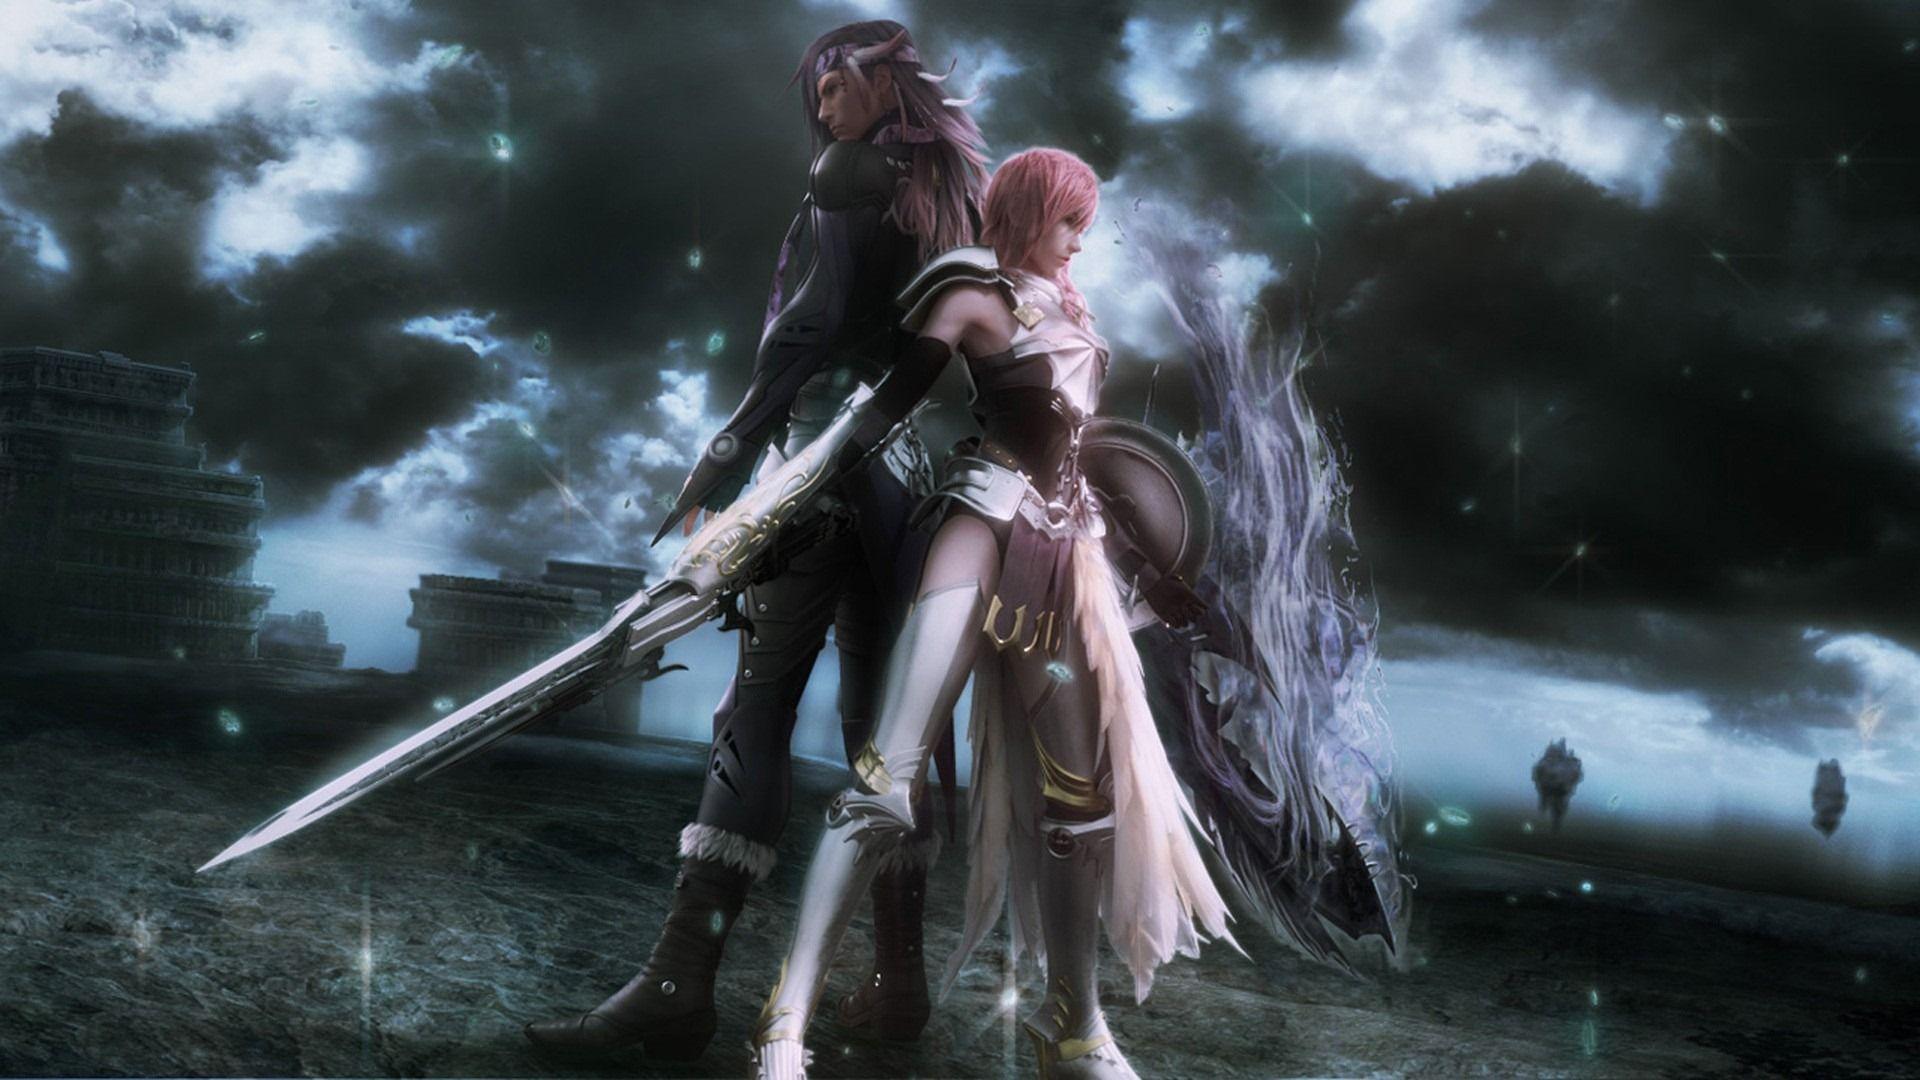 Wallpaper.wiki Final Fantasy XIII 2 Lighting Background PIC